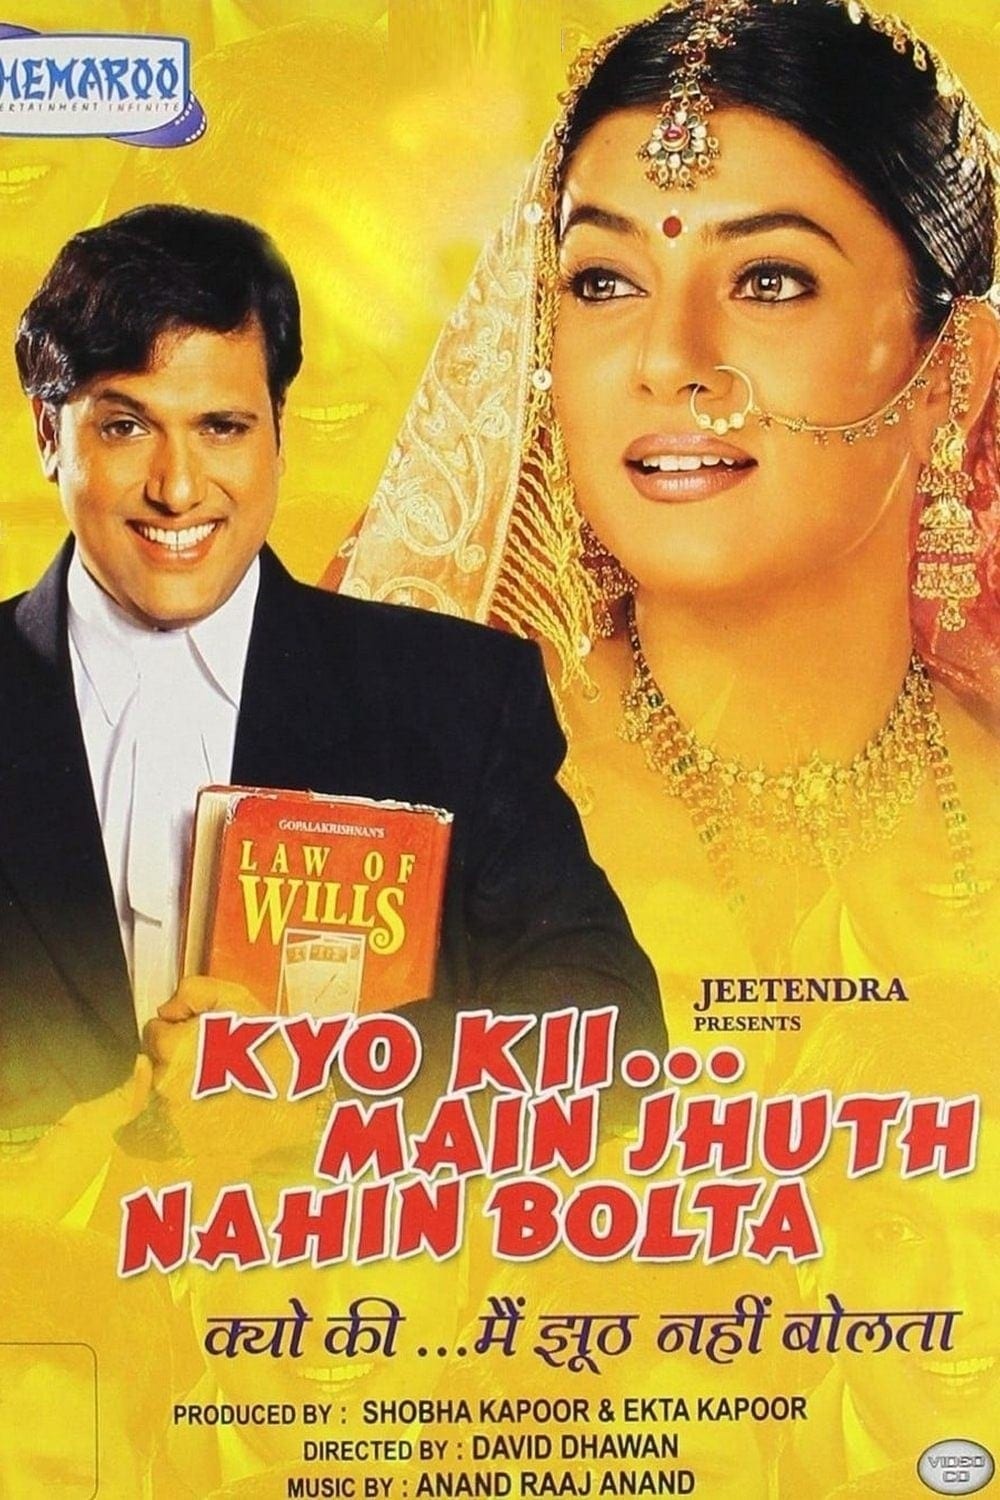 Poster for the movie "Kyo Kii... Main Jhuth Nahin Bolta"